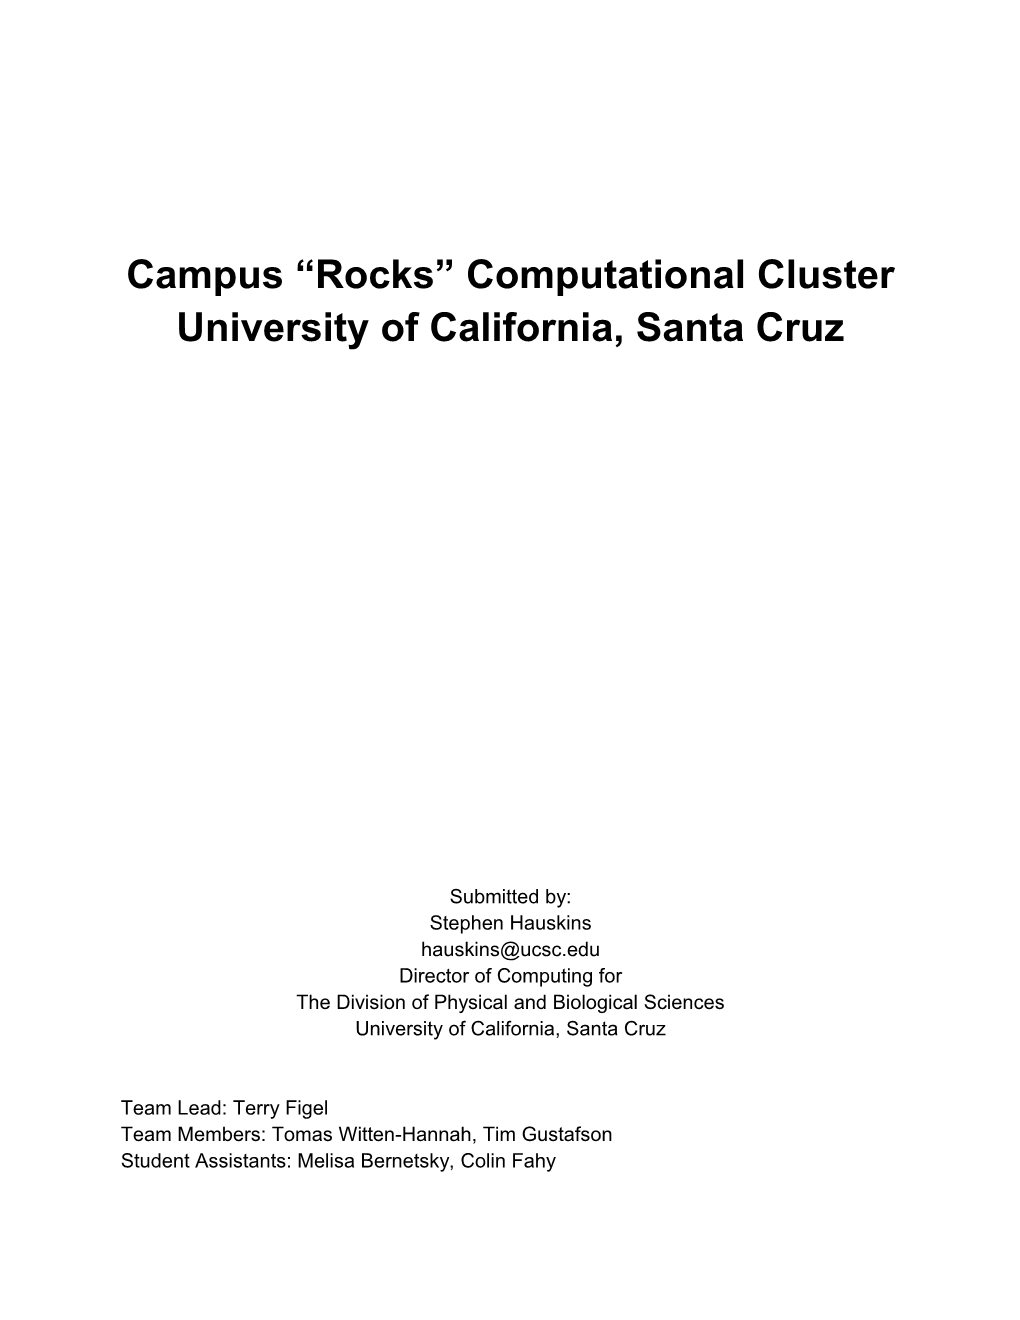 Campus Rocks Computational Cluster